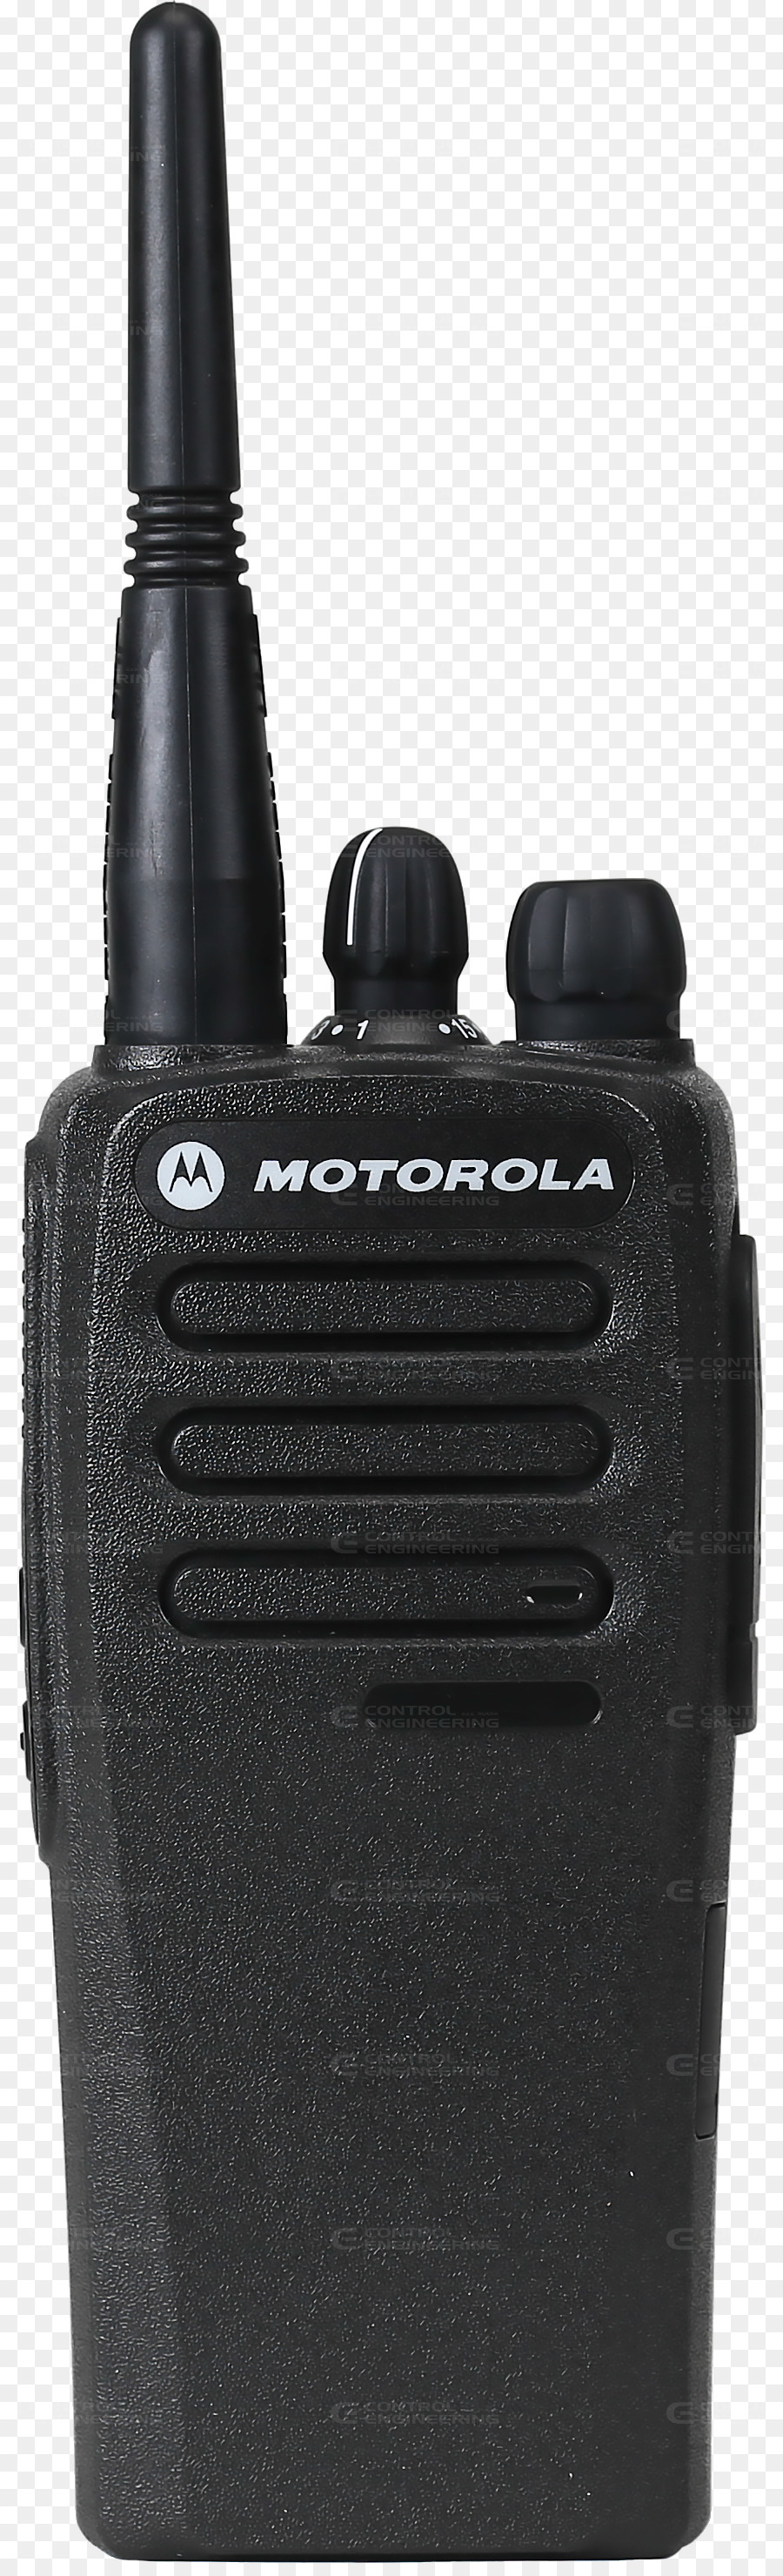 Bidirecionais De Rádio，A Motorola Solutions PNG